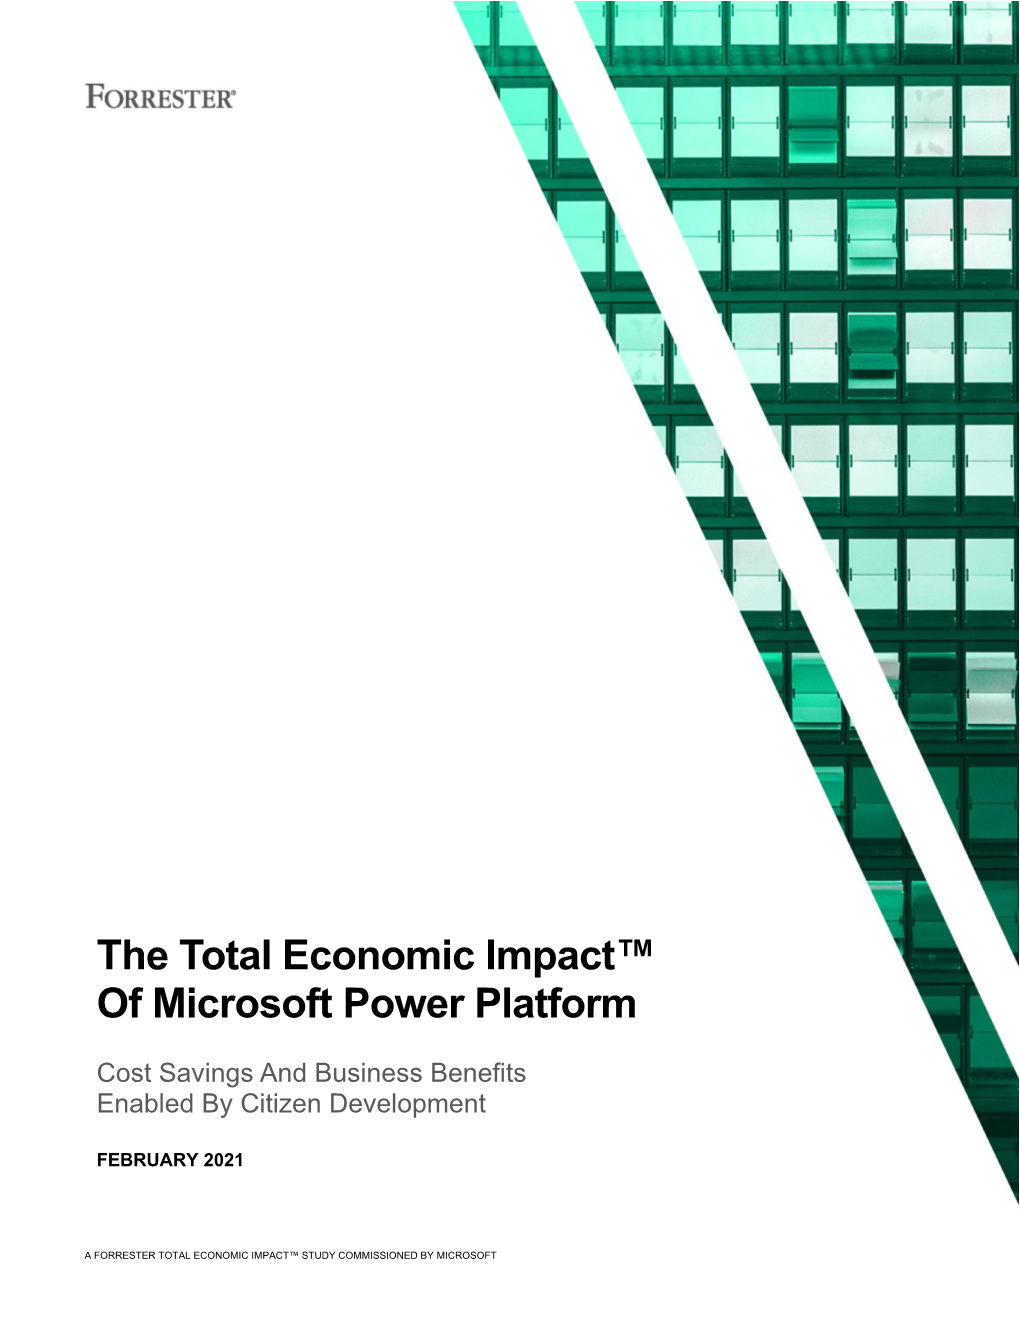 The Total Economic Impact™ of Microsoft Power Platform